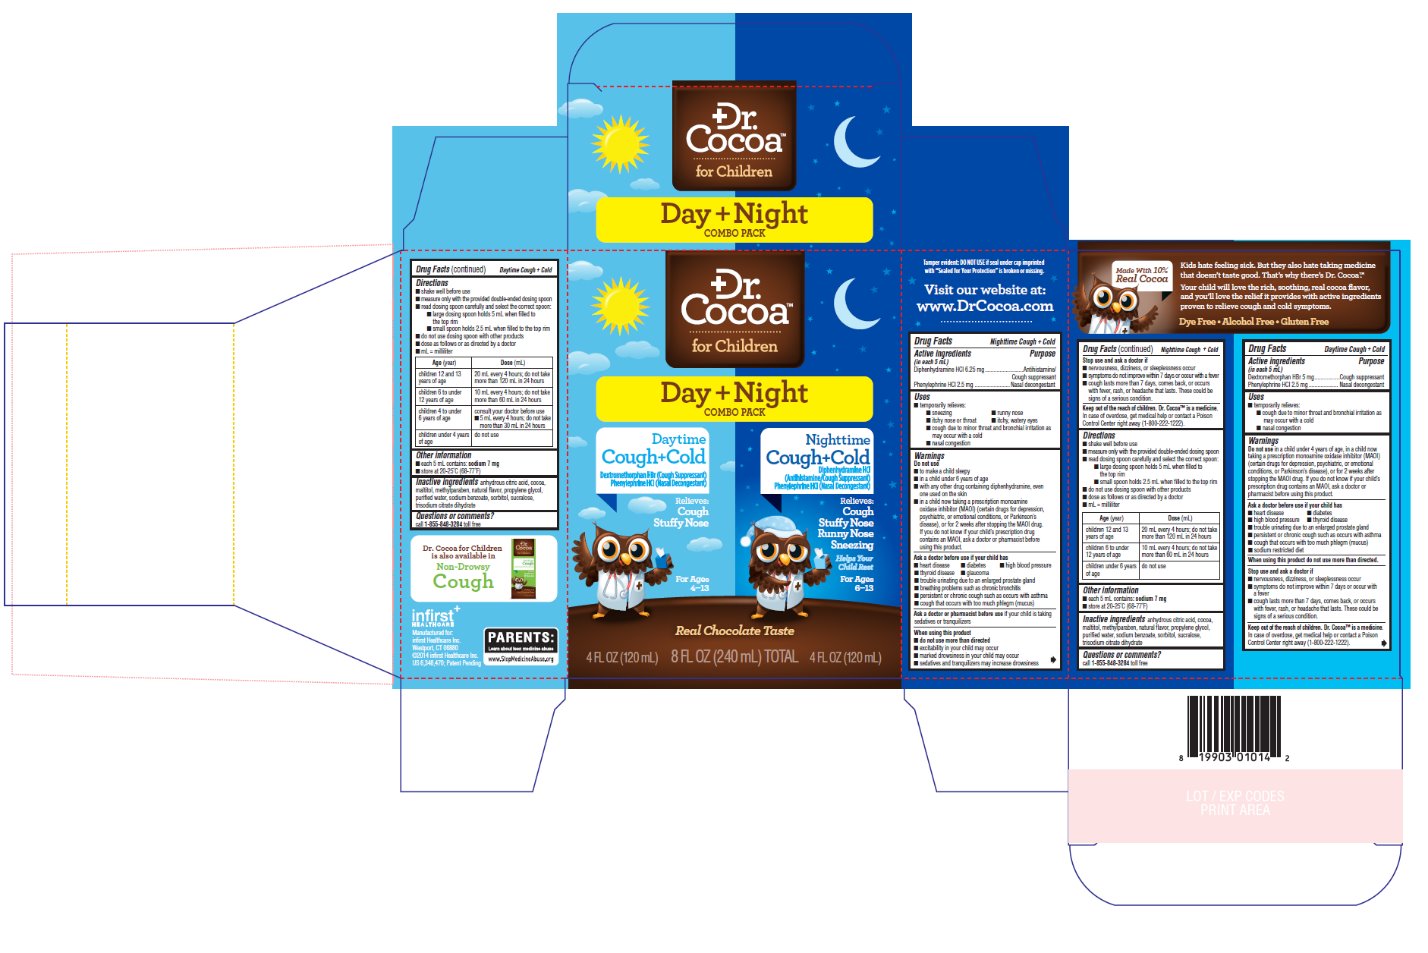 Dr. Cocoa Day + Night carton label image